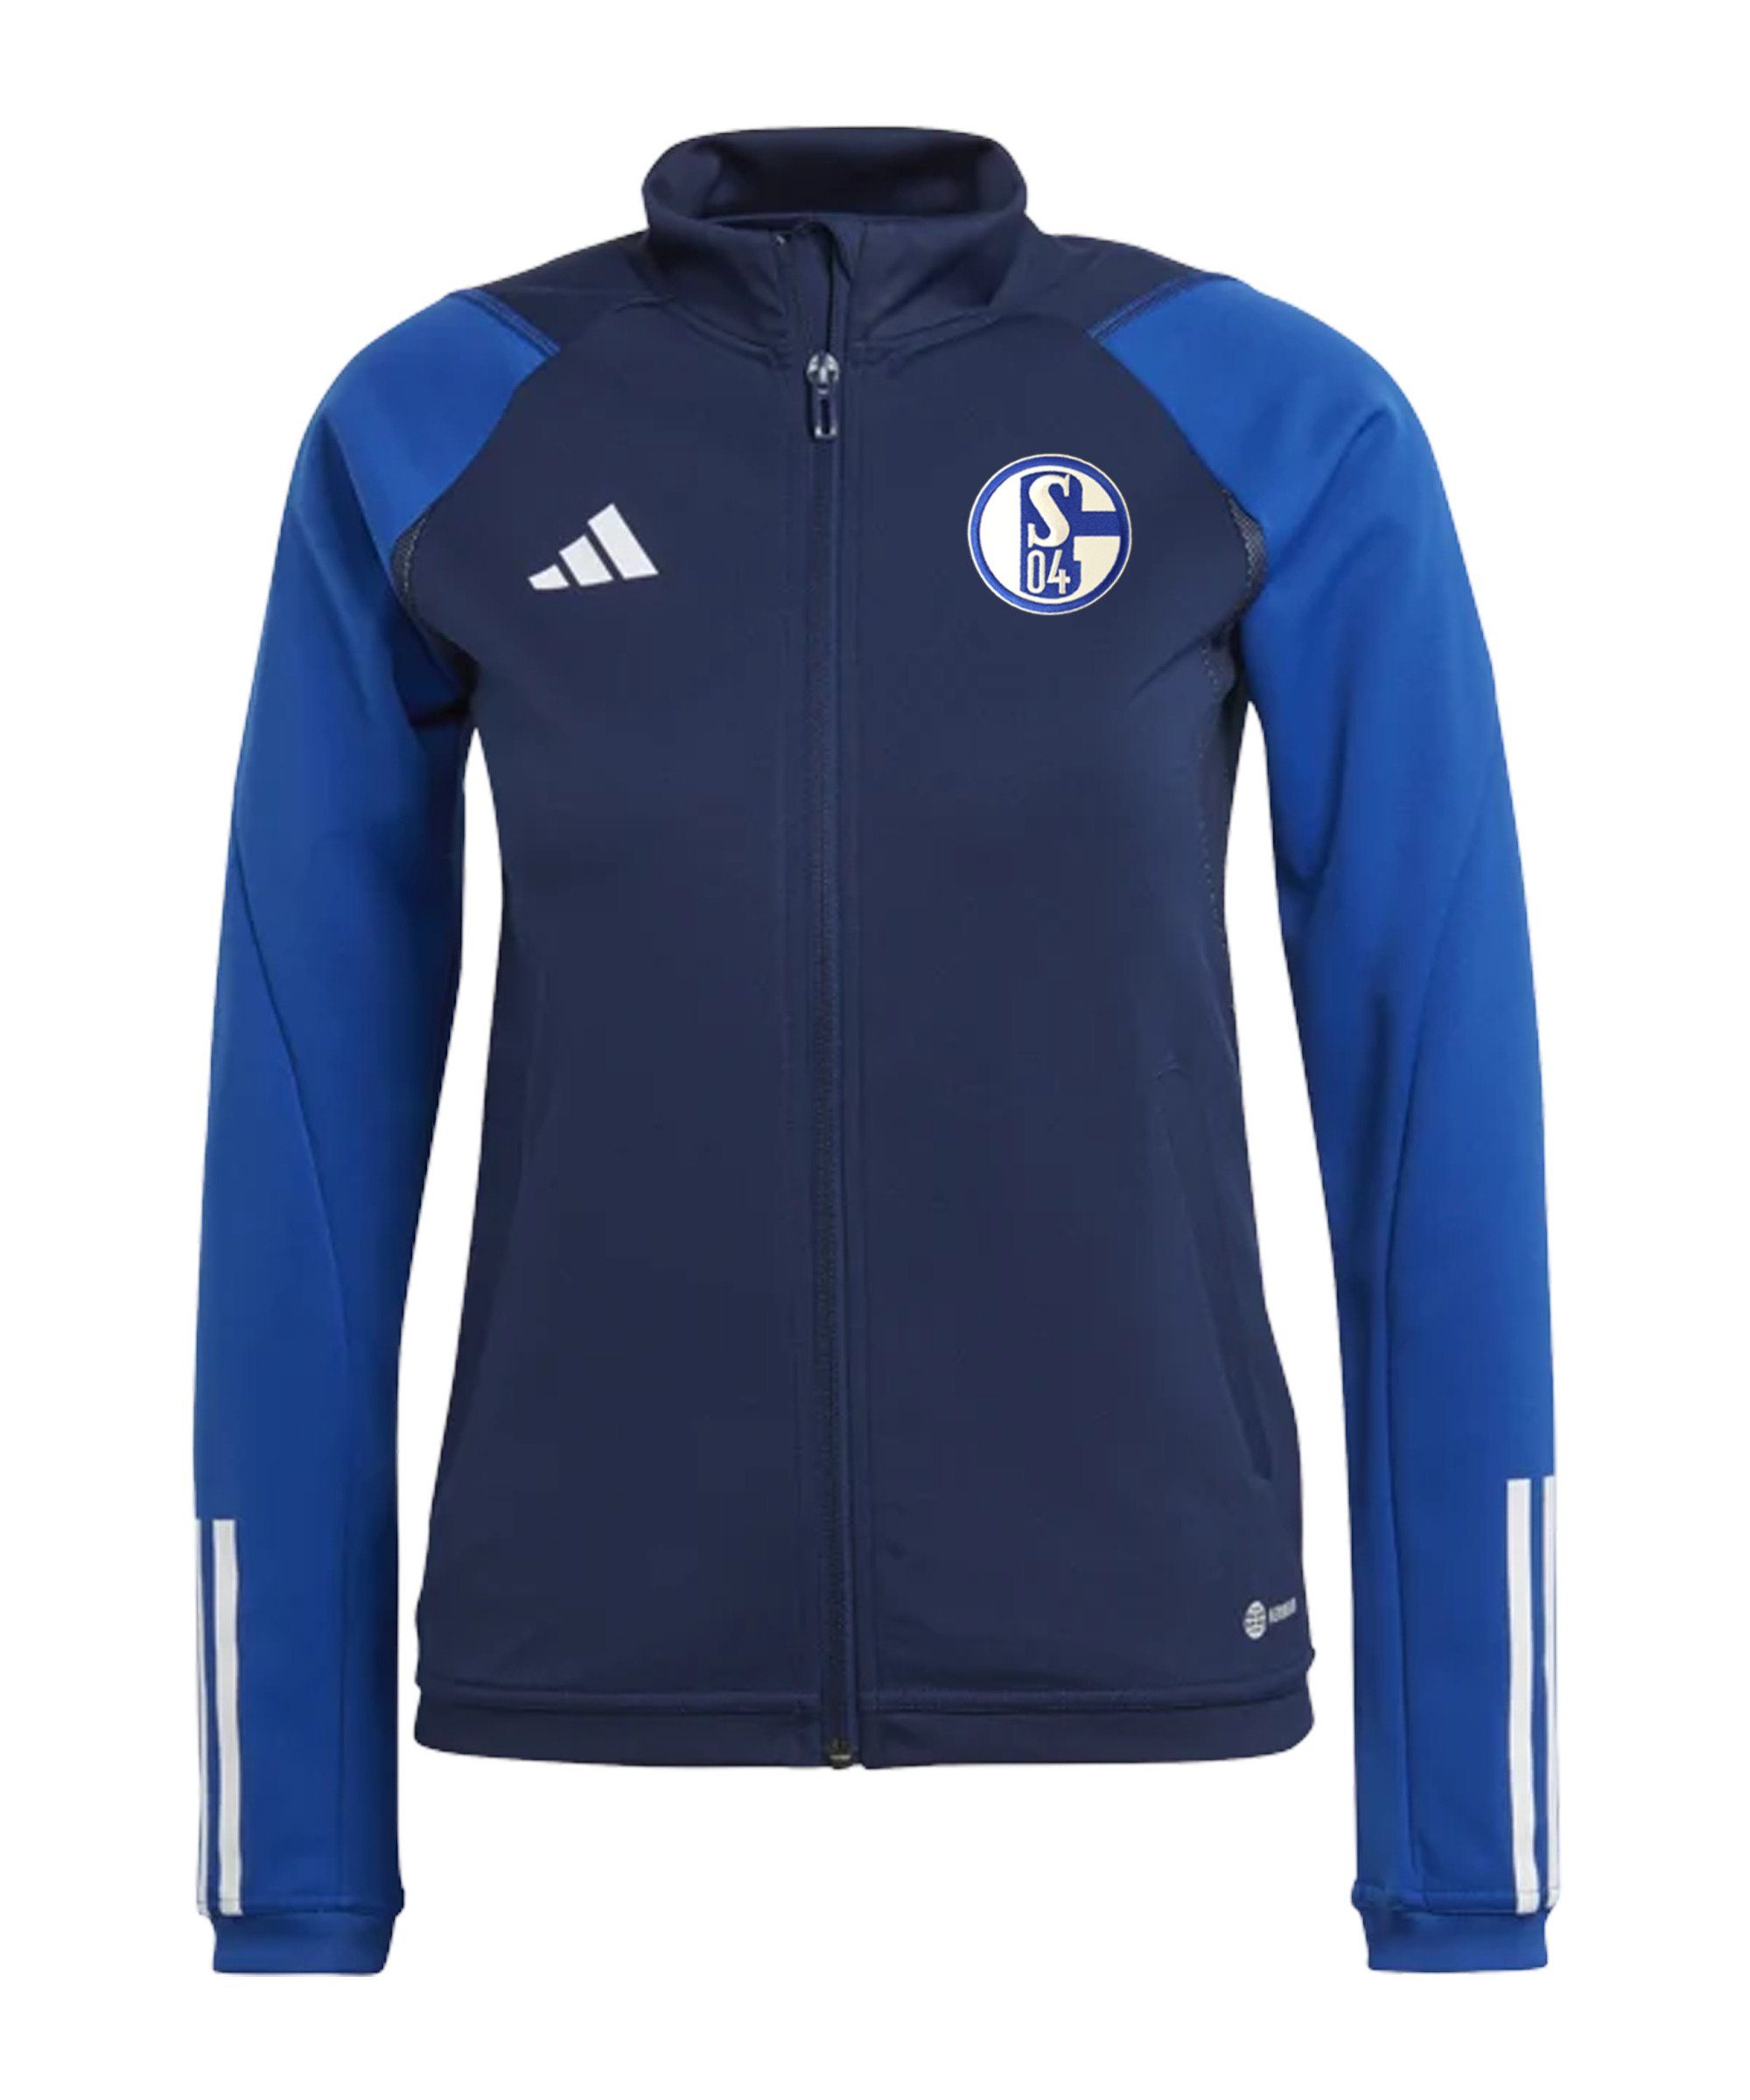 spottbillig verschleudern adidas Performance Sweatjacke FC 04 Schalke Kids Trainingsjacke